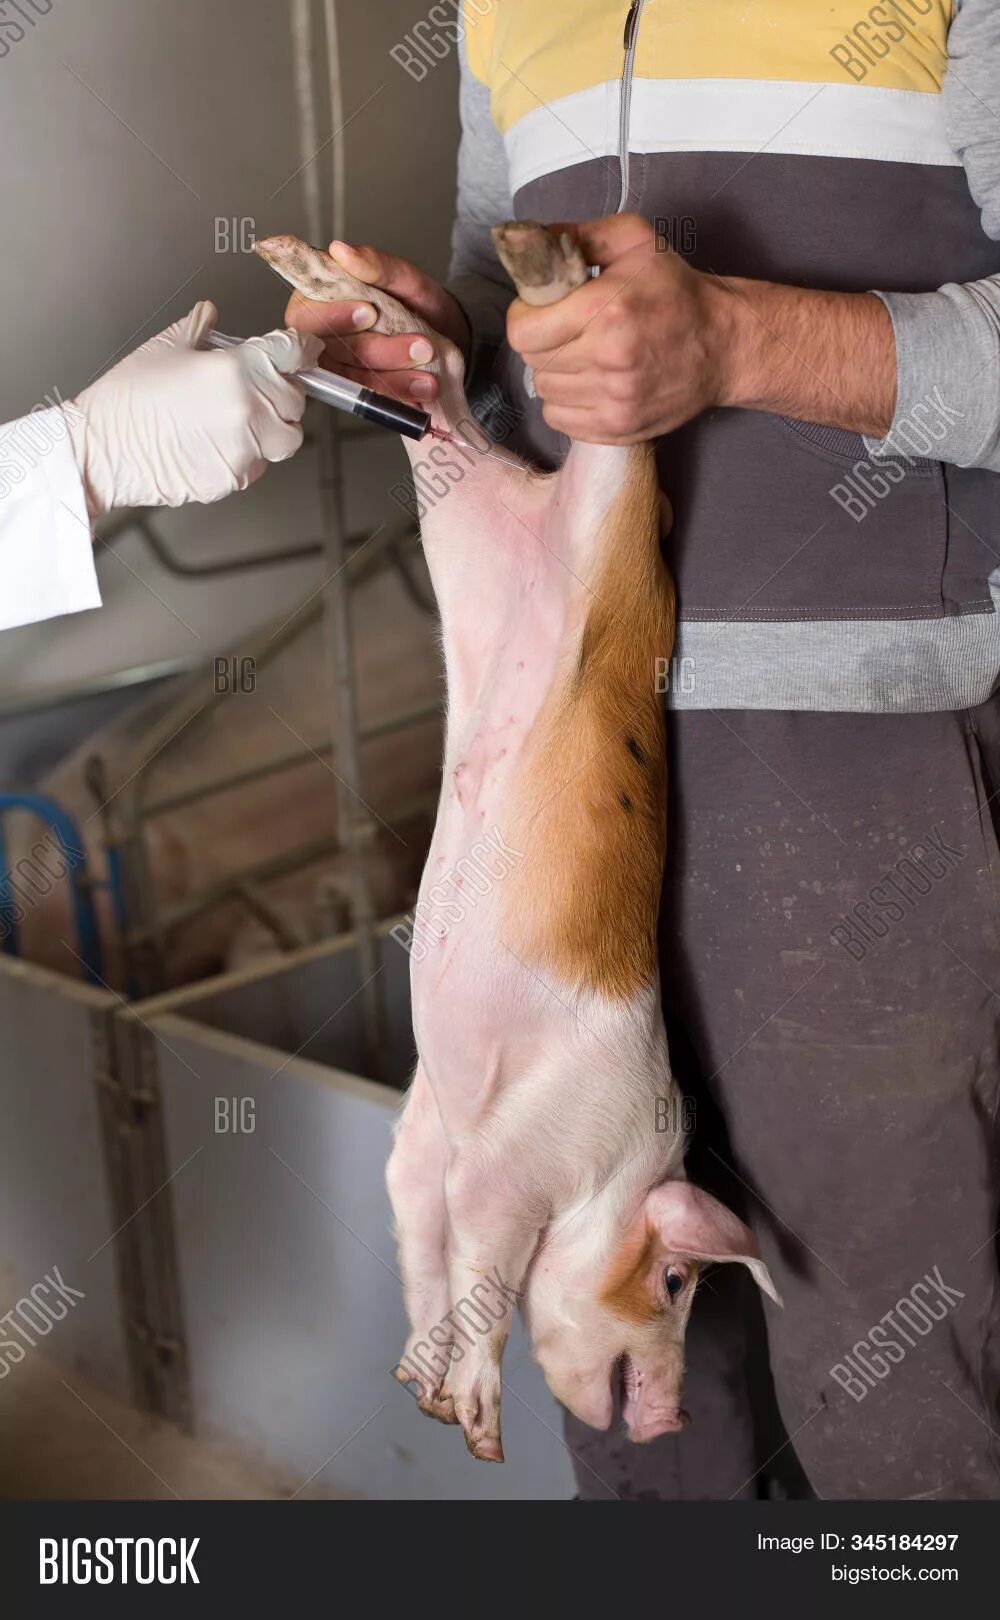 Вакцинация свиней на производстве. Инъекции свинье